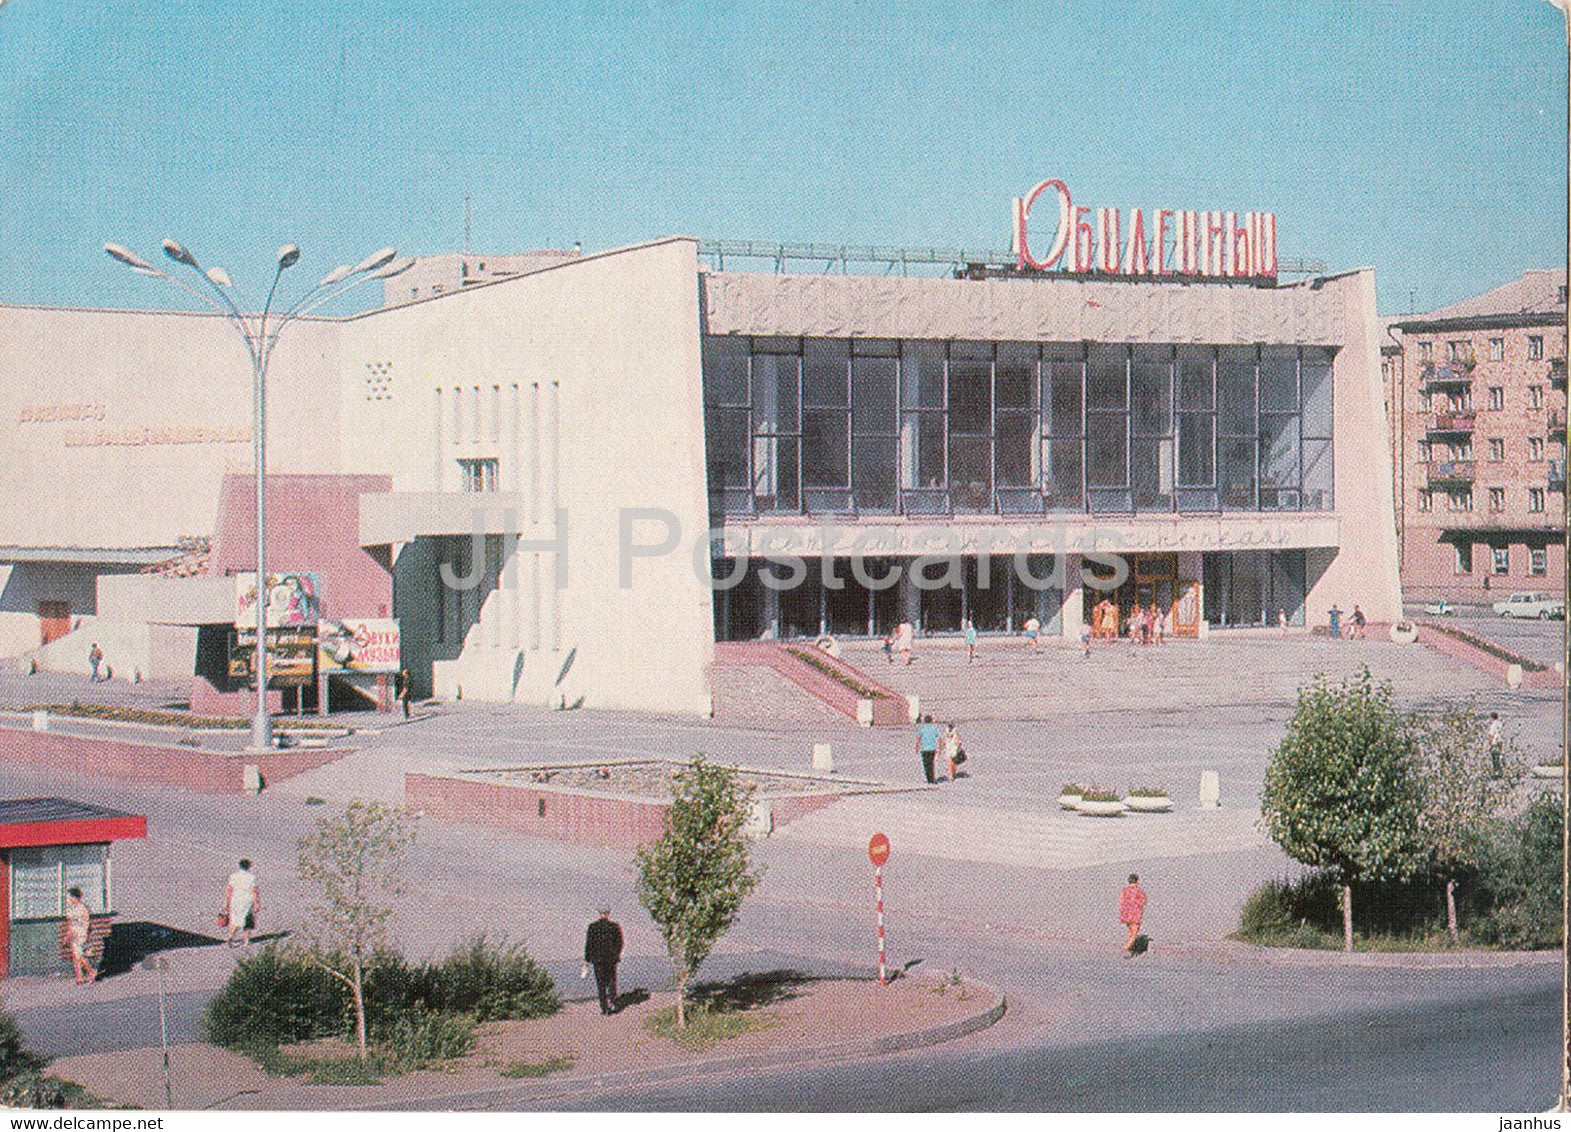 Karaganda - Karagandy - cinema theatre Yubileinyi - postal stationery - 1976 - Kazakhstan USSR - unused - JH Postcards